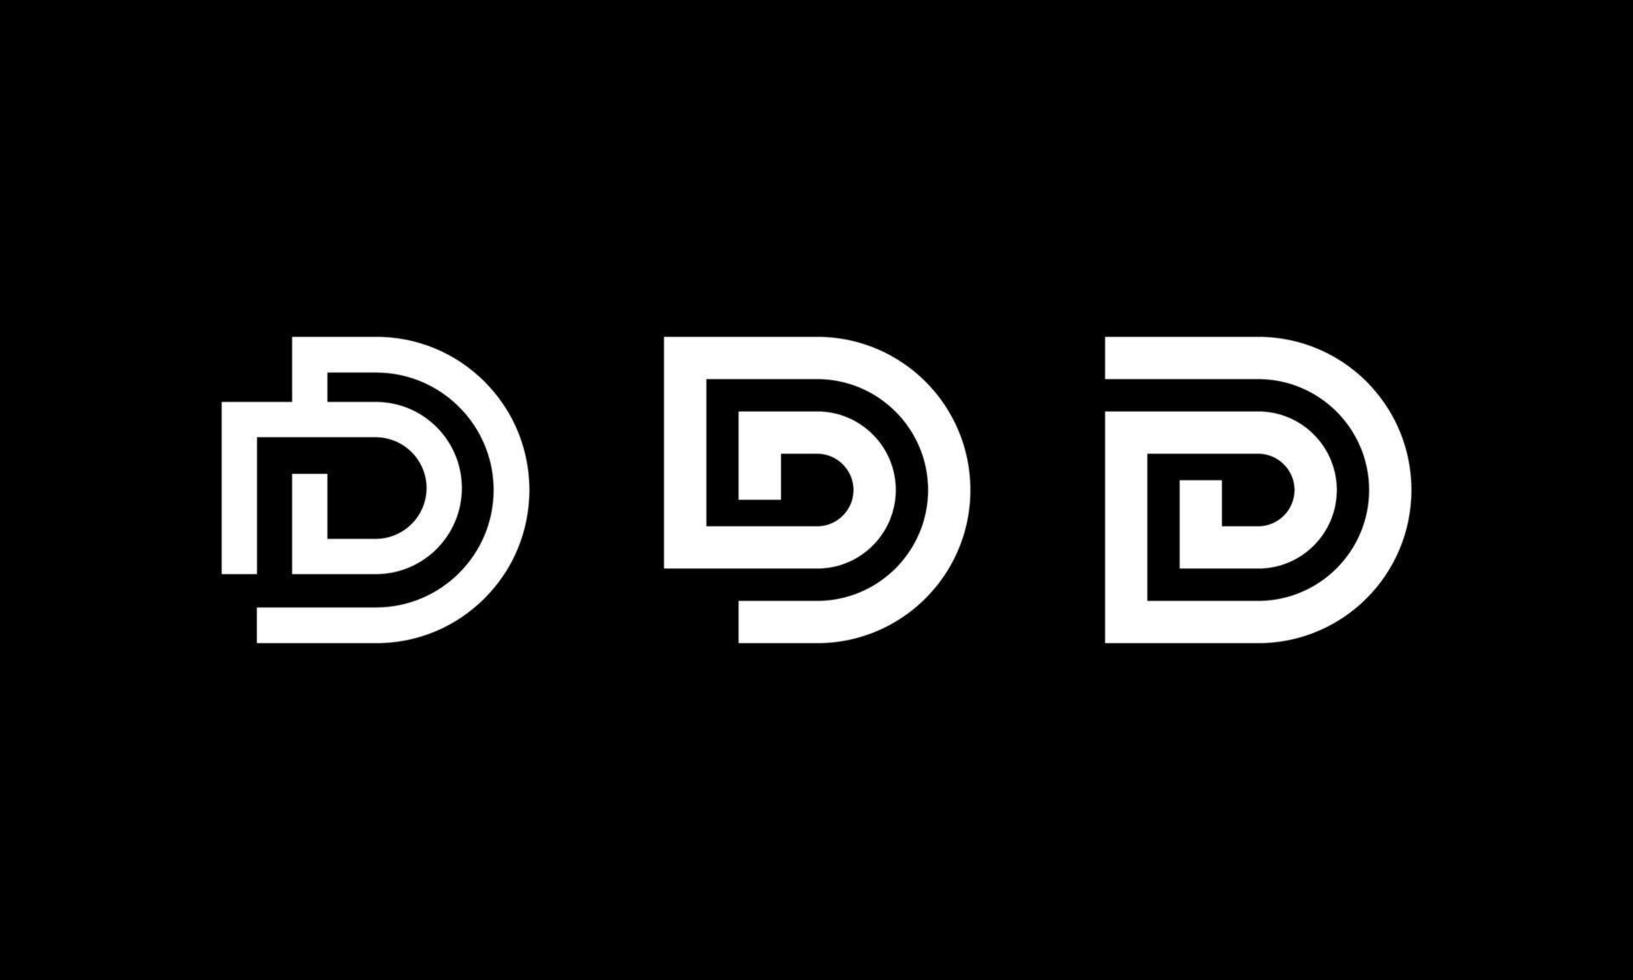 logotipo limpo e mínimo baseado inicial. símbolo de ícone de monograma de fontes criativas de letra d. design de vetor de alfabeto de luxo elegante universal